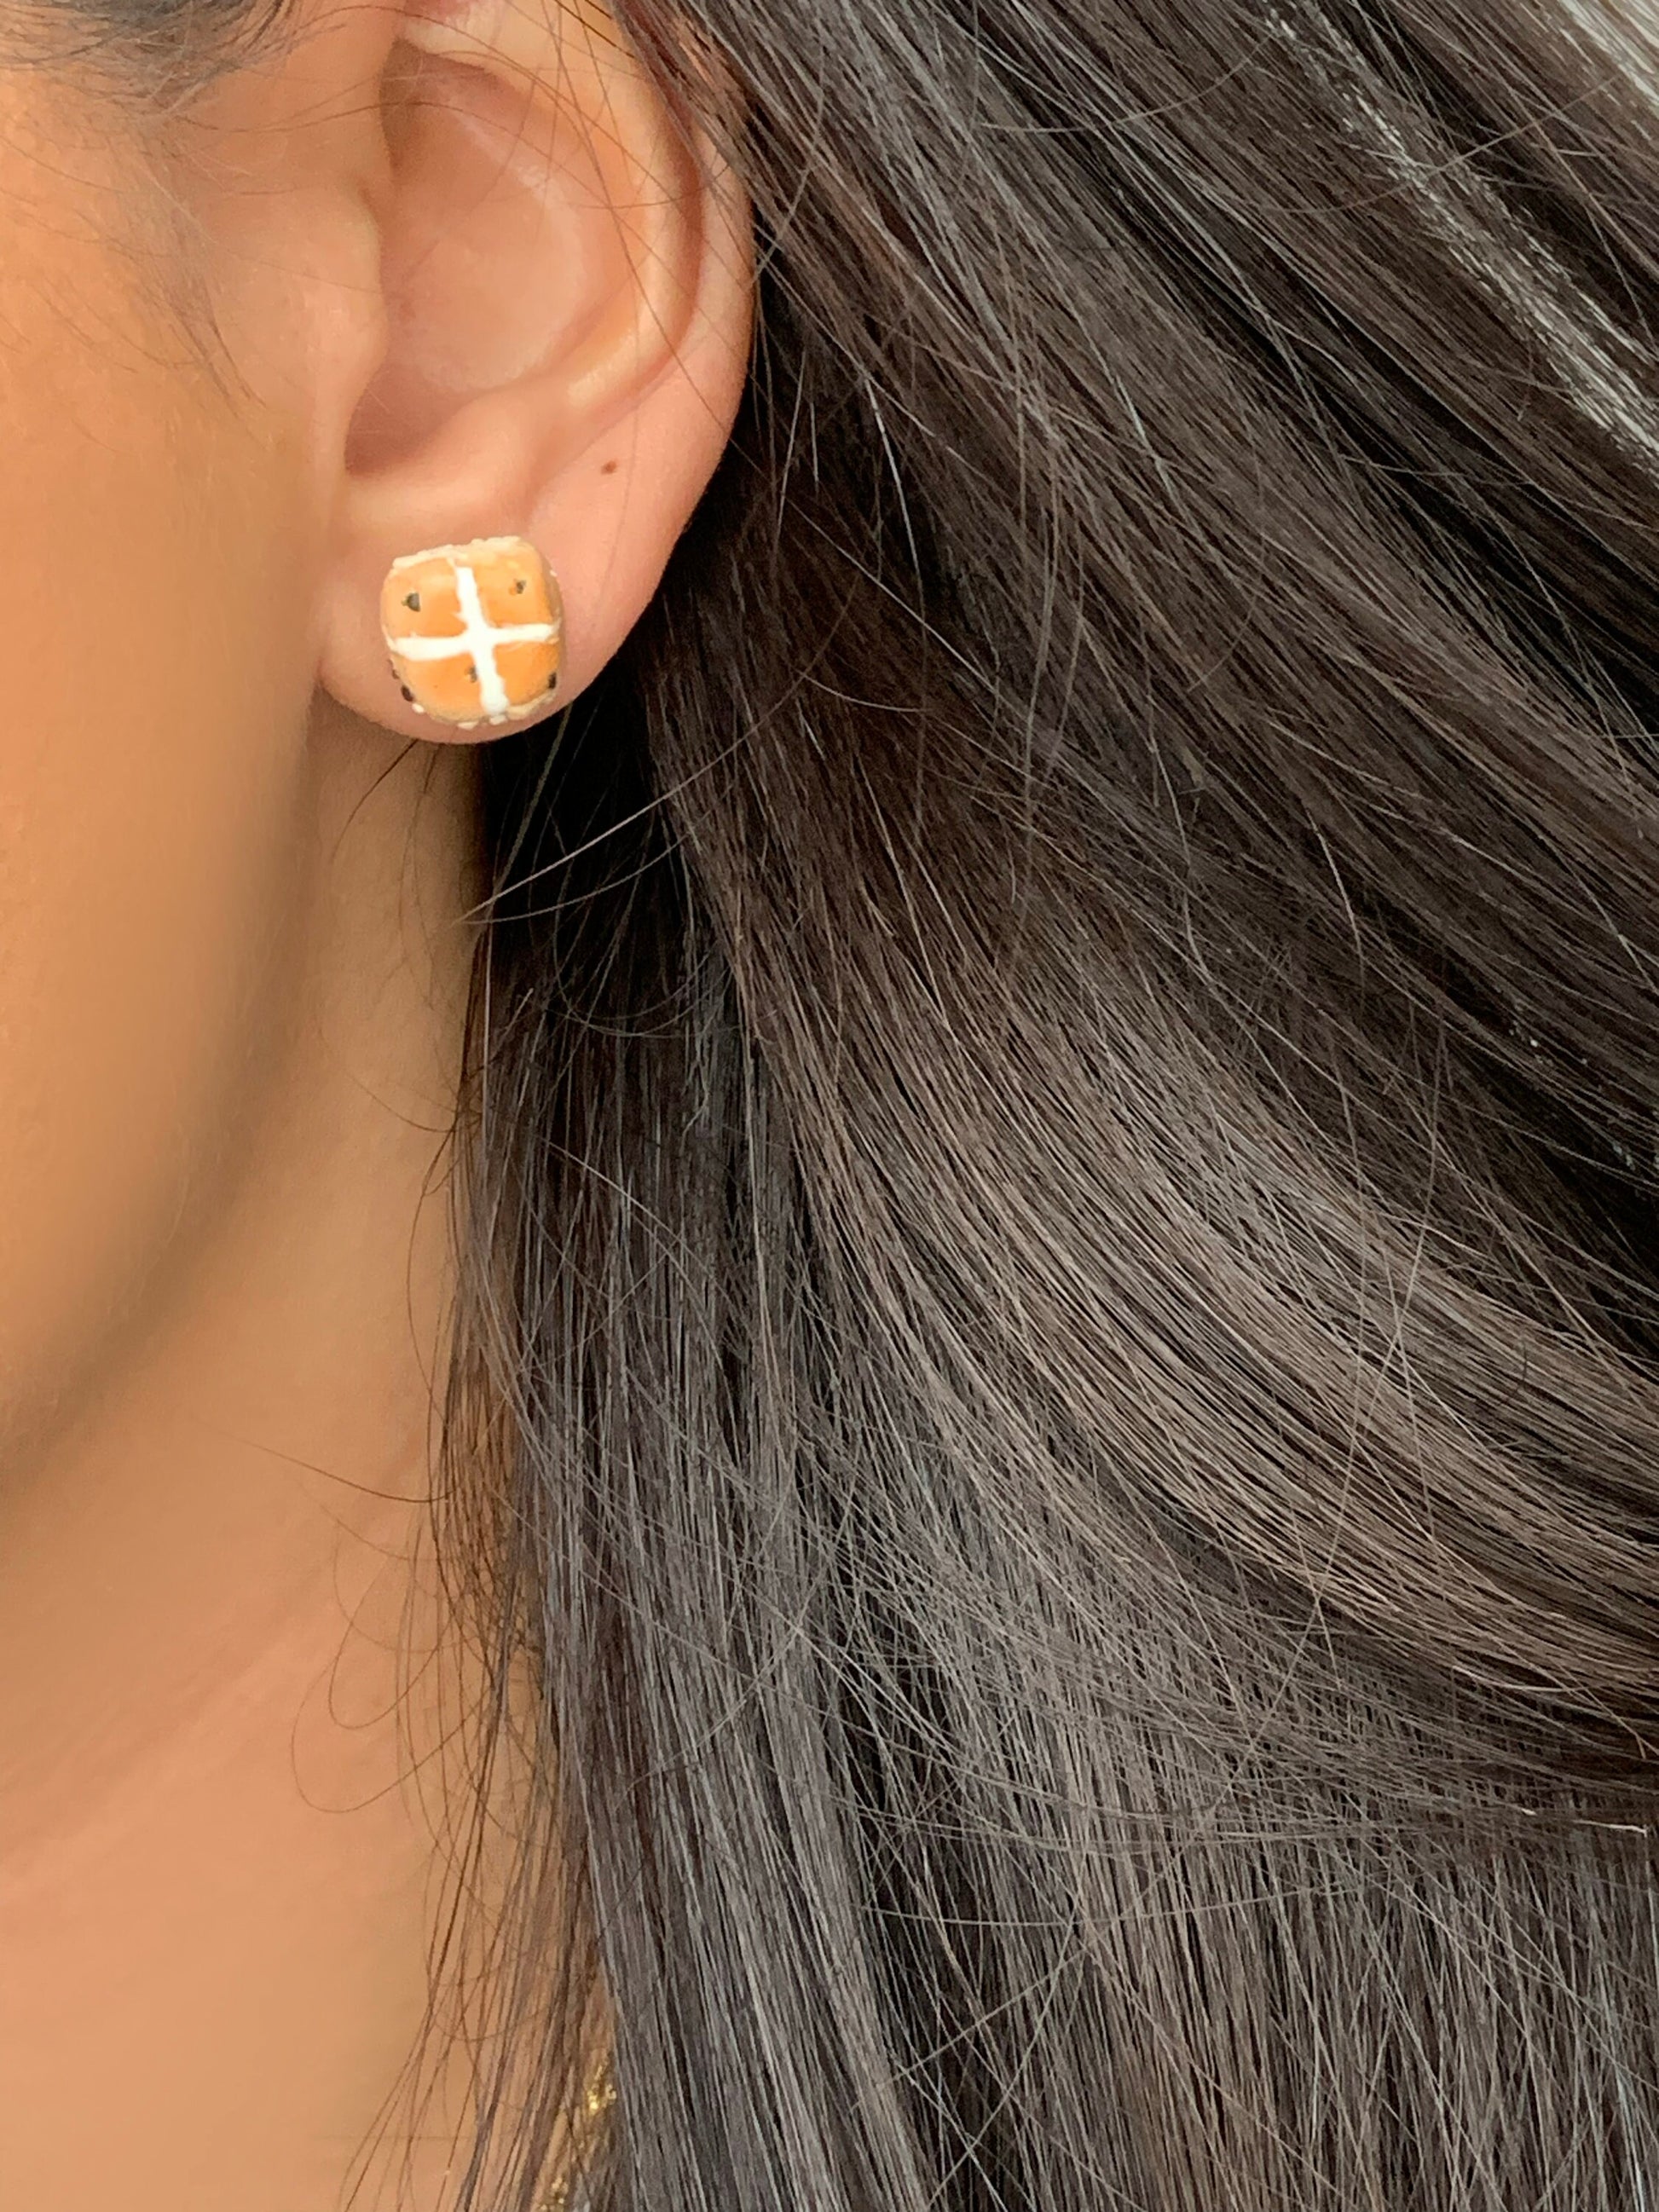 hot cross bun stud earrings for easter, being worn by a model